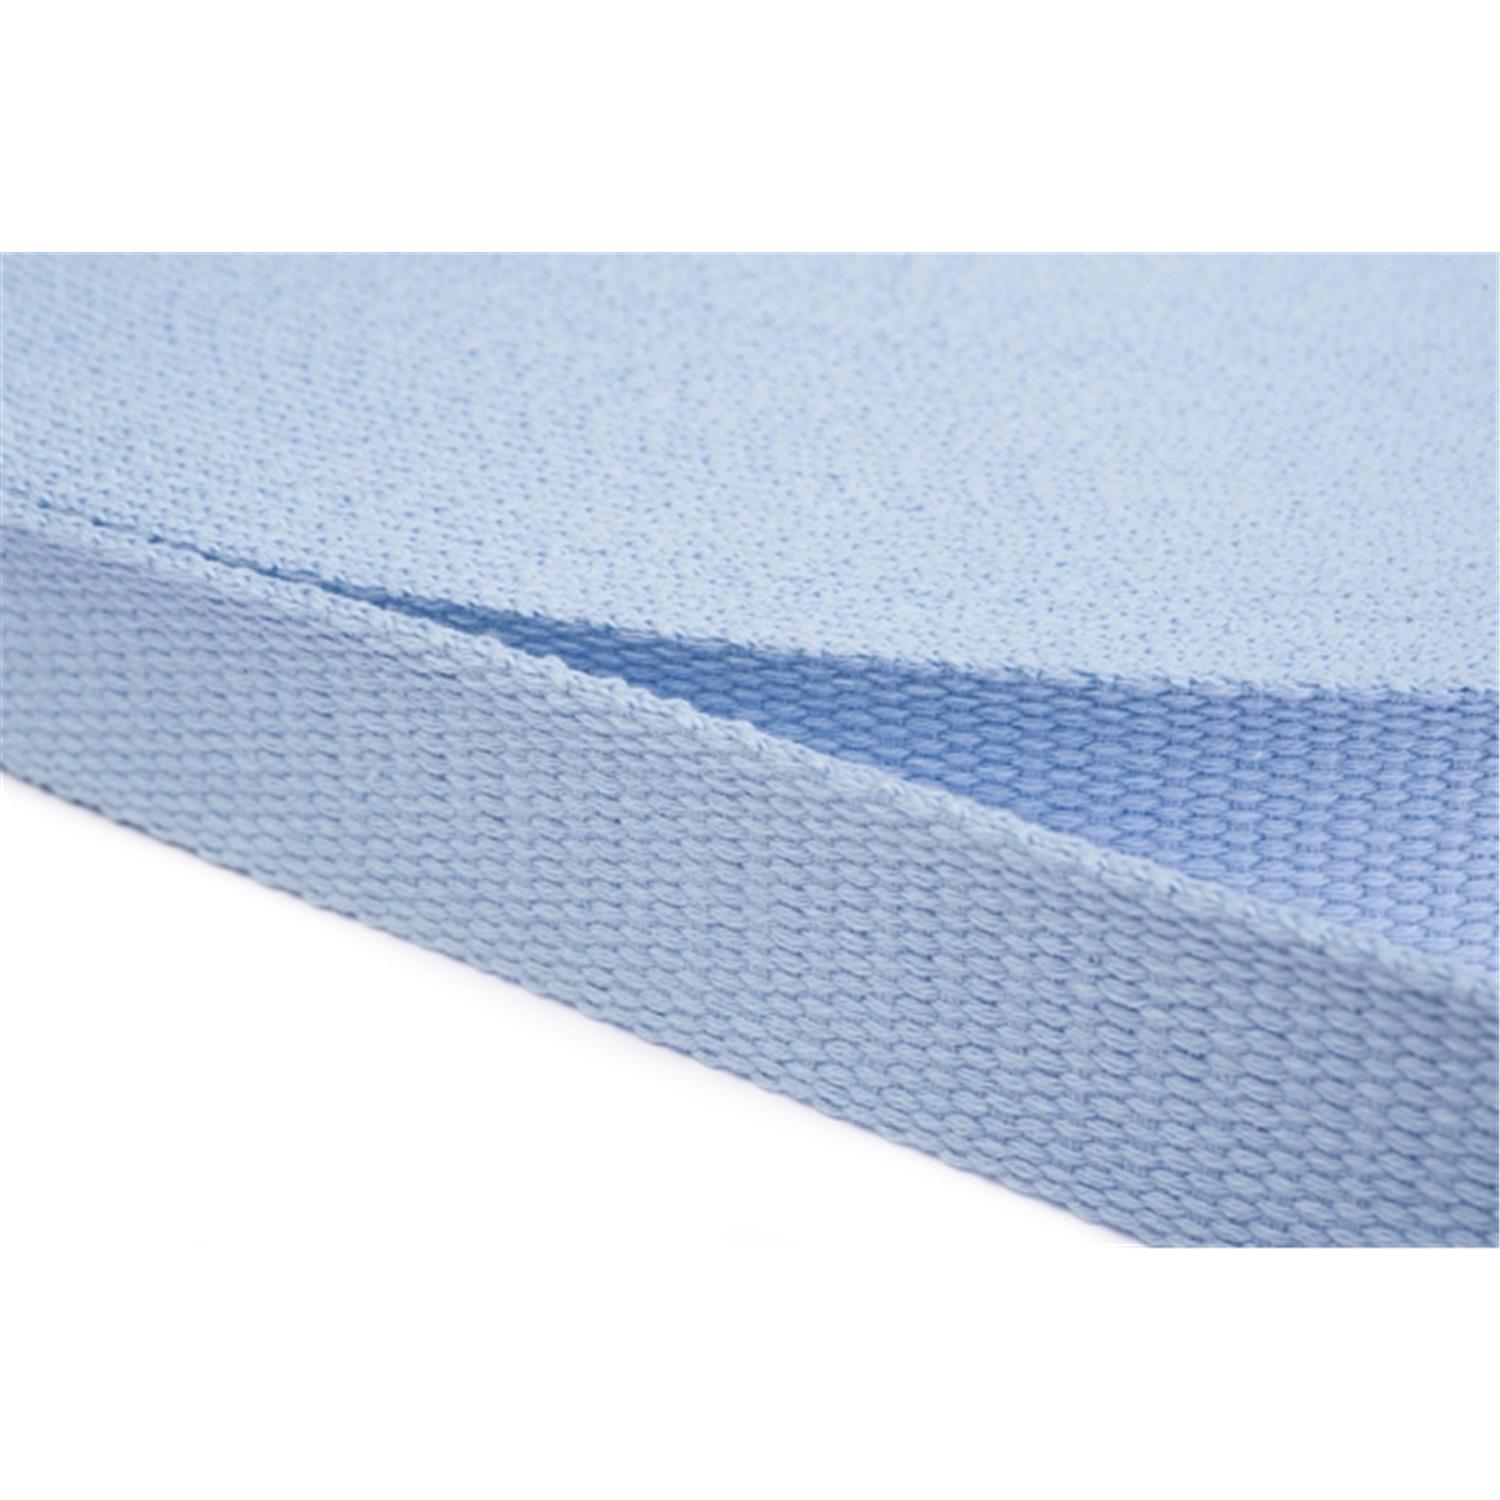 Gurtband aus Baumwolle 20mm in 20 Farben 11 - hellblau 12 Meter